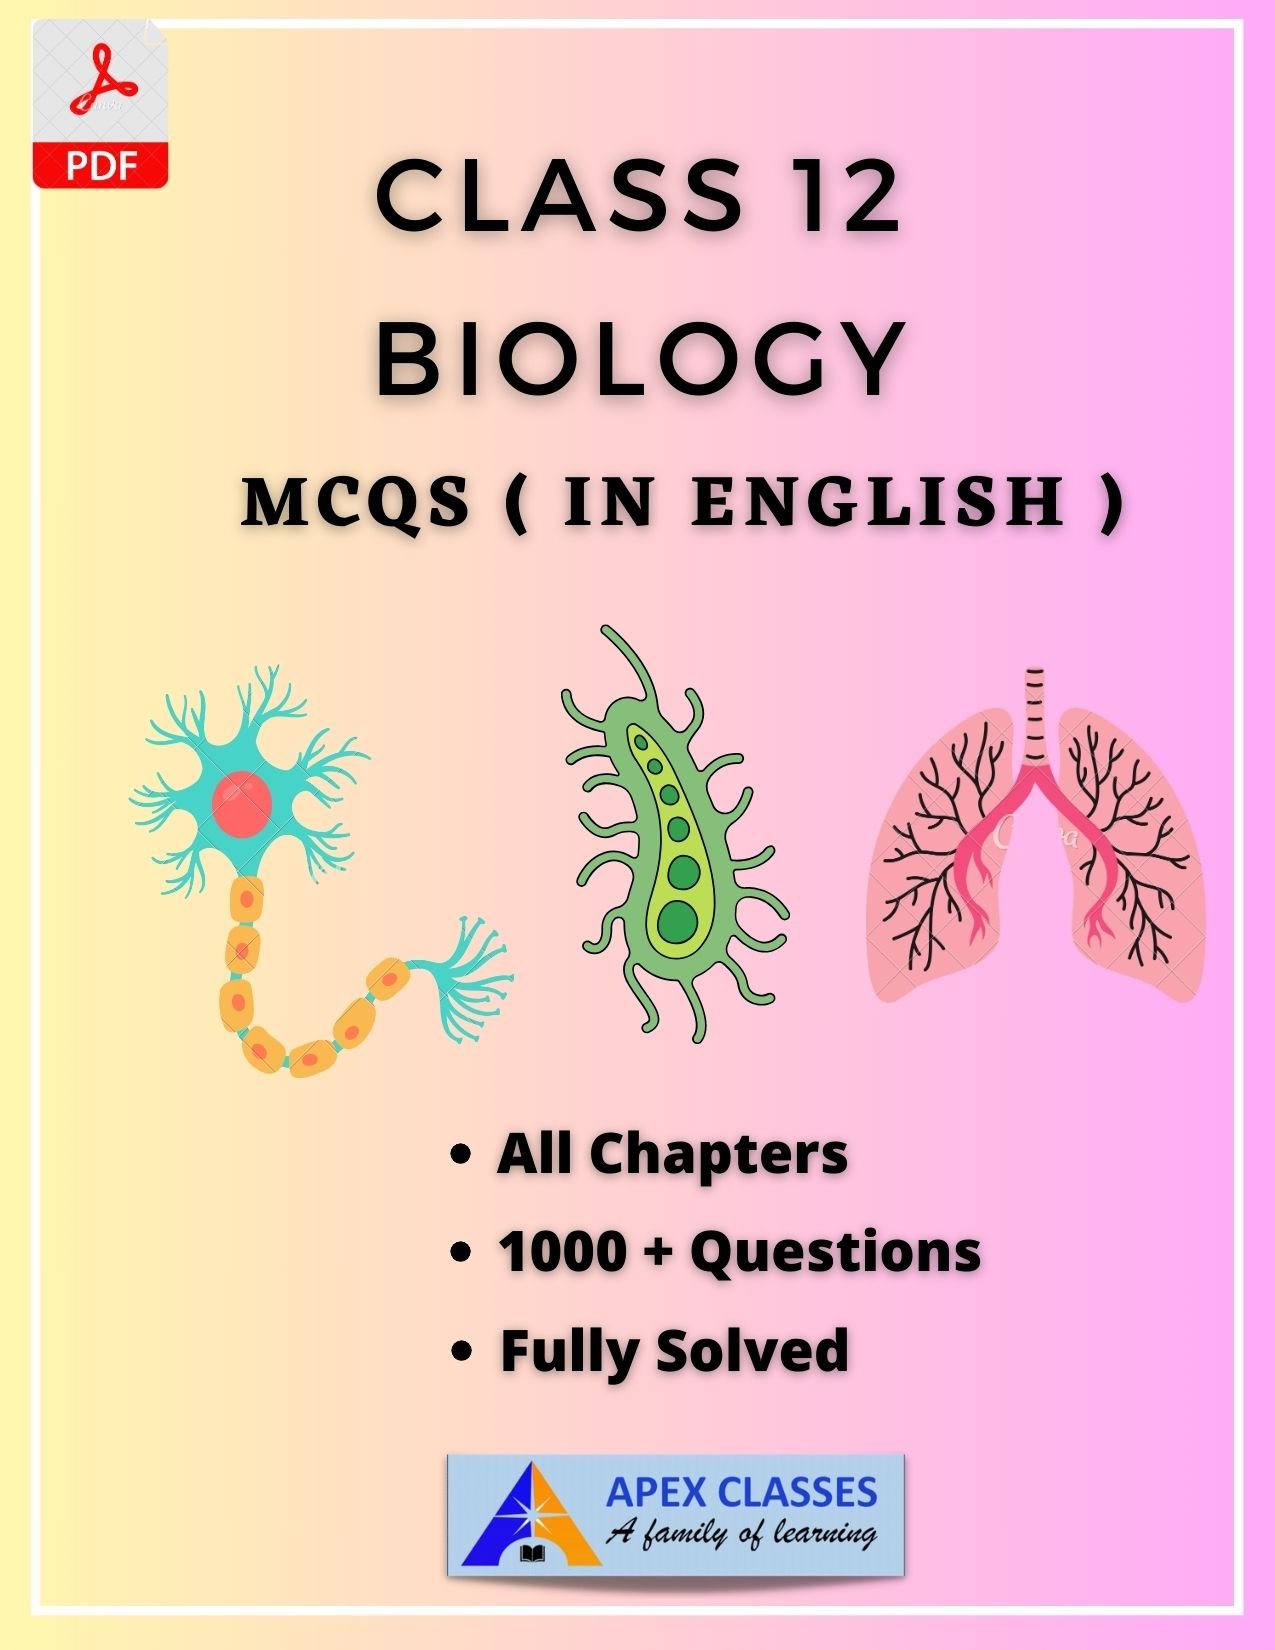 Class 12 Biology MCQs in English in PDF